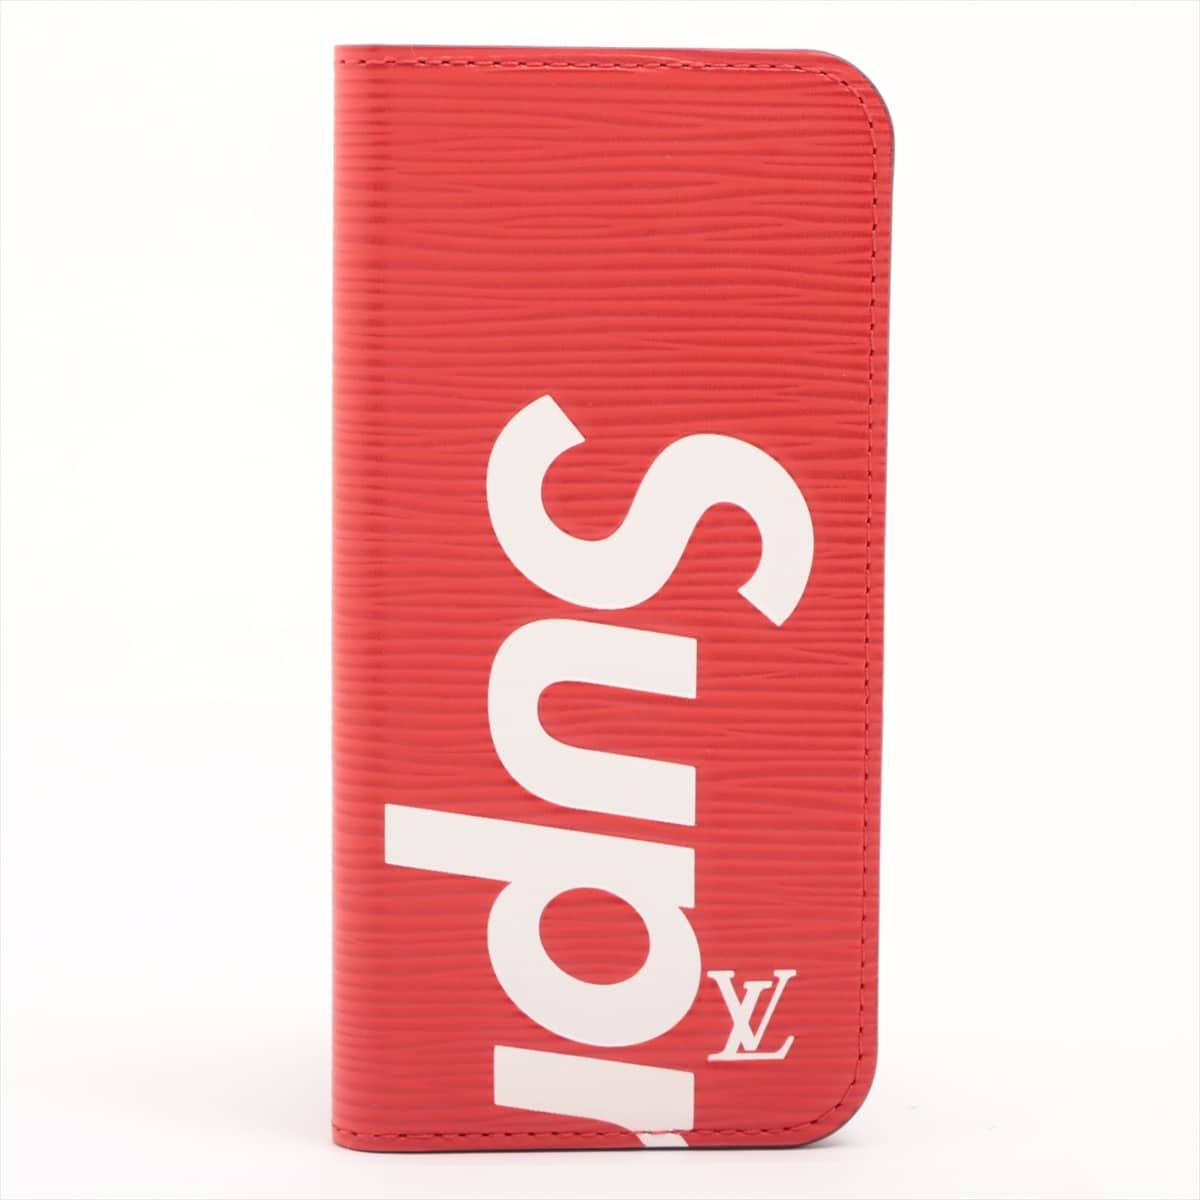 Louis Vuitton × Supreme Epi Folio M67757 Leather Mobile phone case Red BC2107 iPhone7